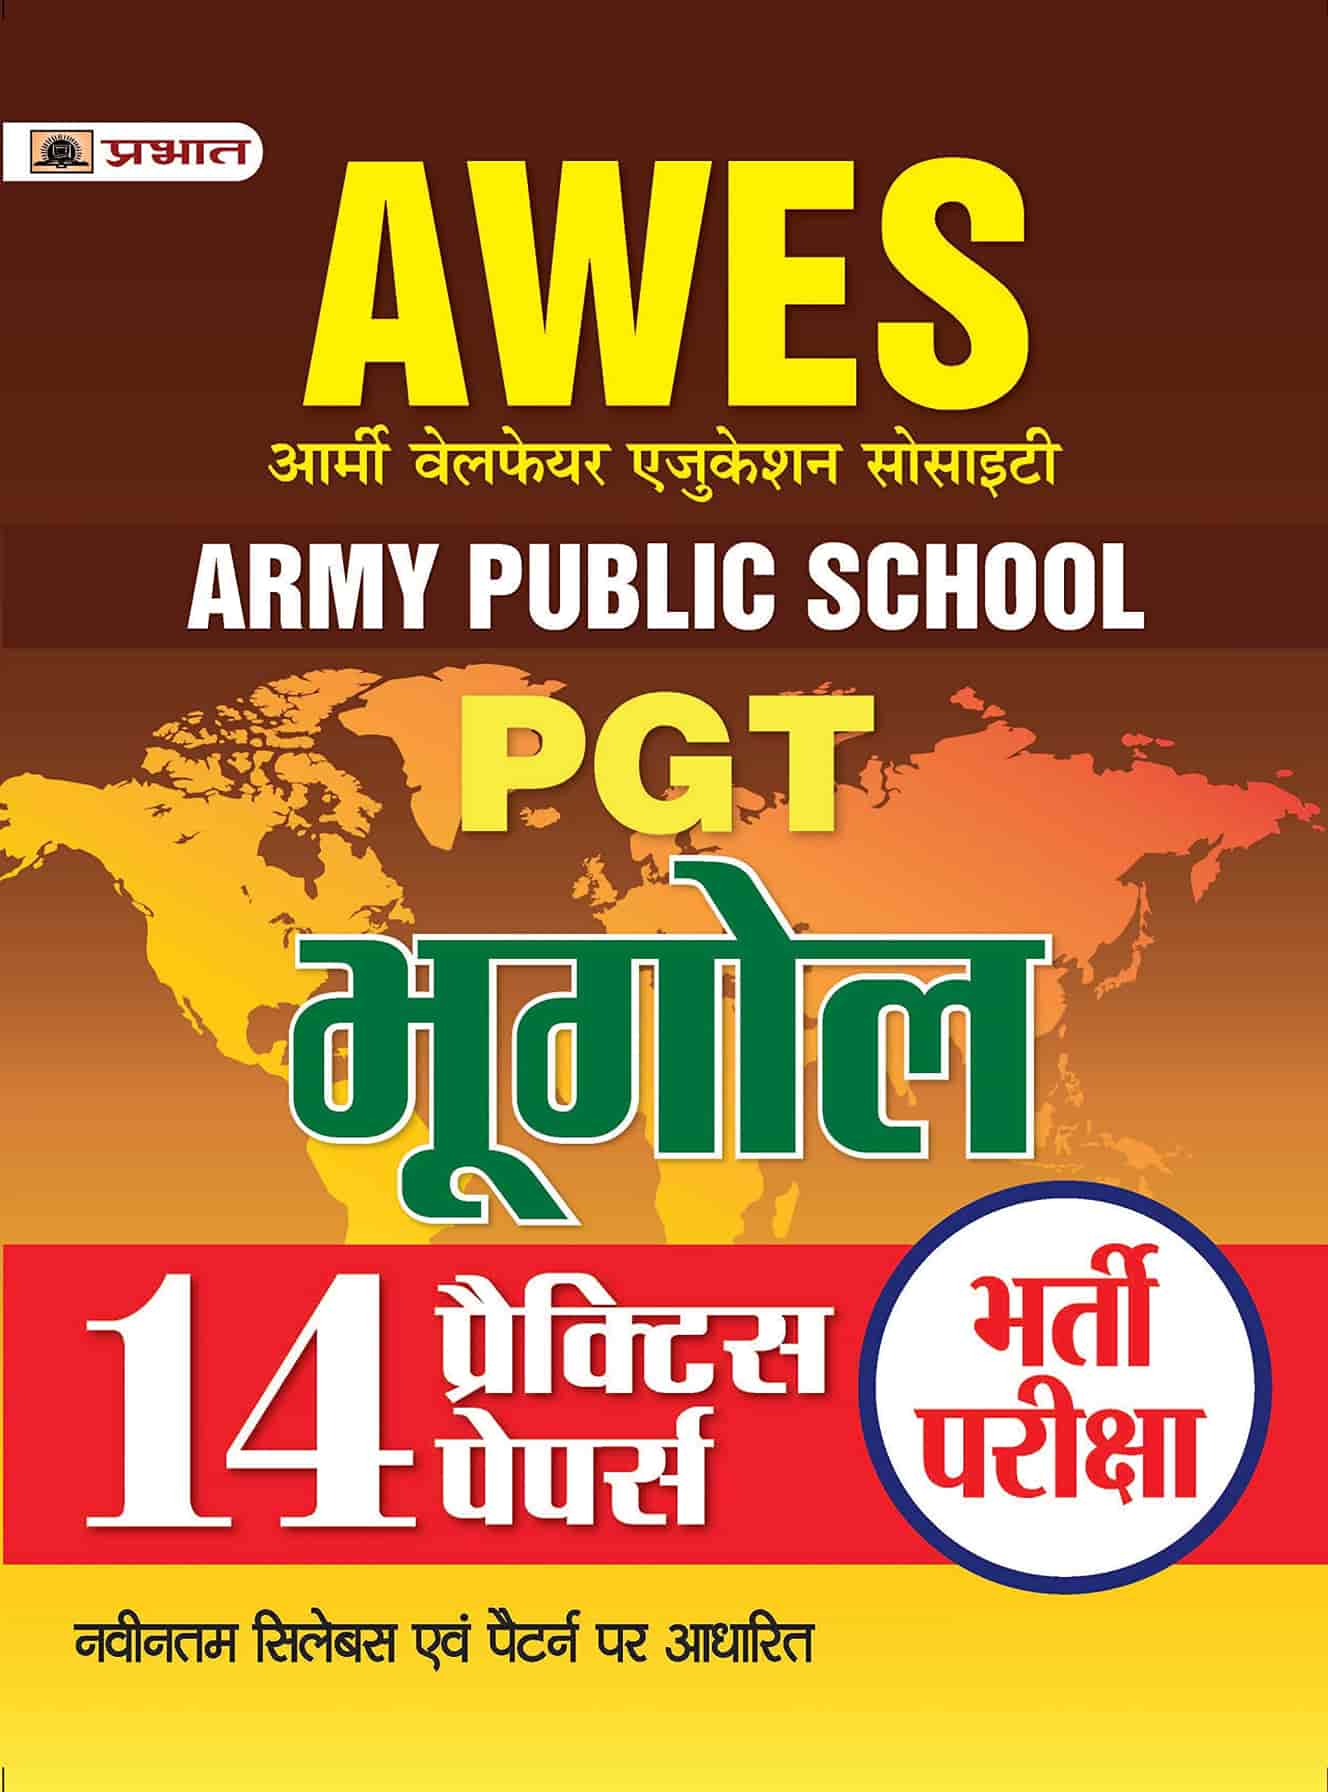 ARMY PUBLIC SCHOOL PGT BHUGOL 15 PRACTICE SETS 